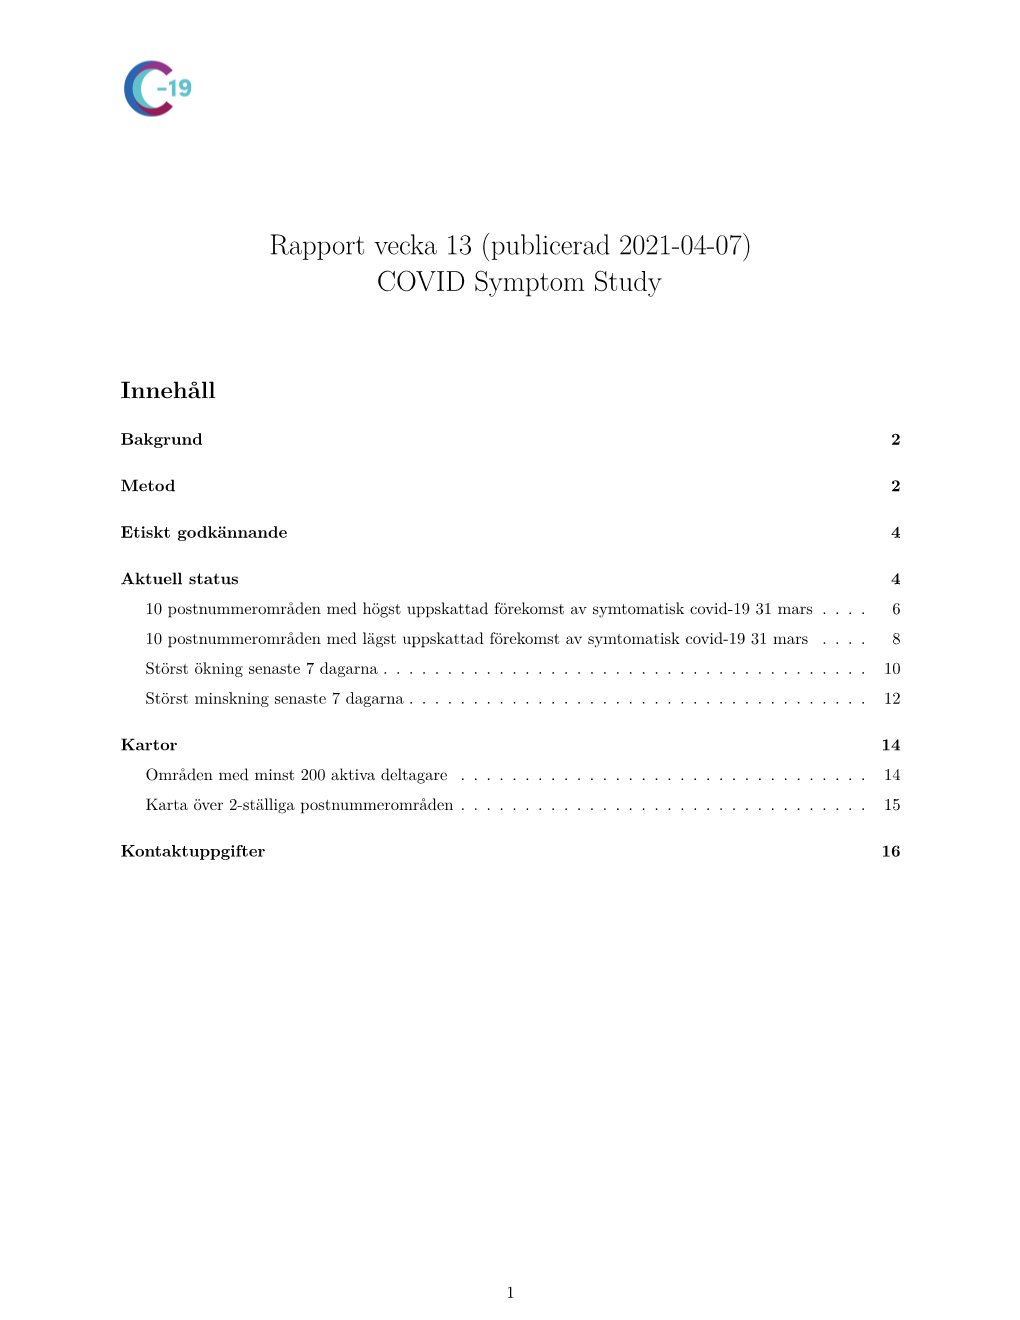 Rapport Vecka 13 (Publicerad 2021-04-07) COVID Symptom Study